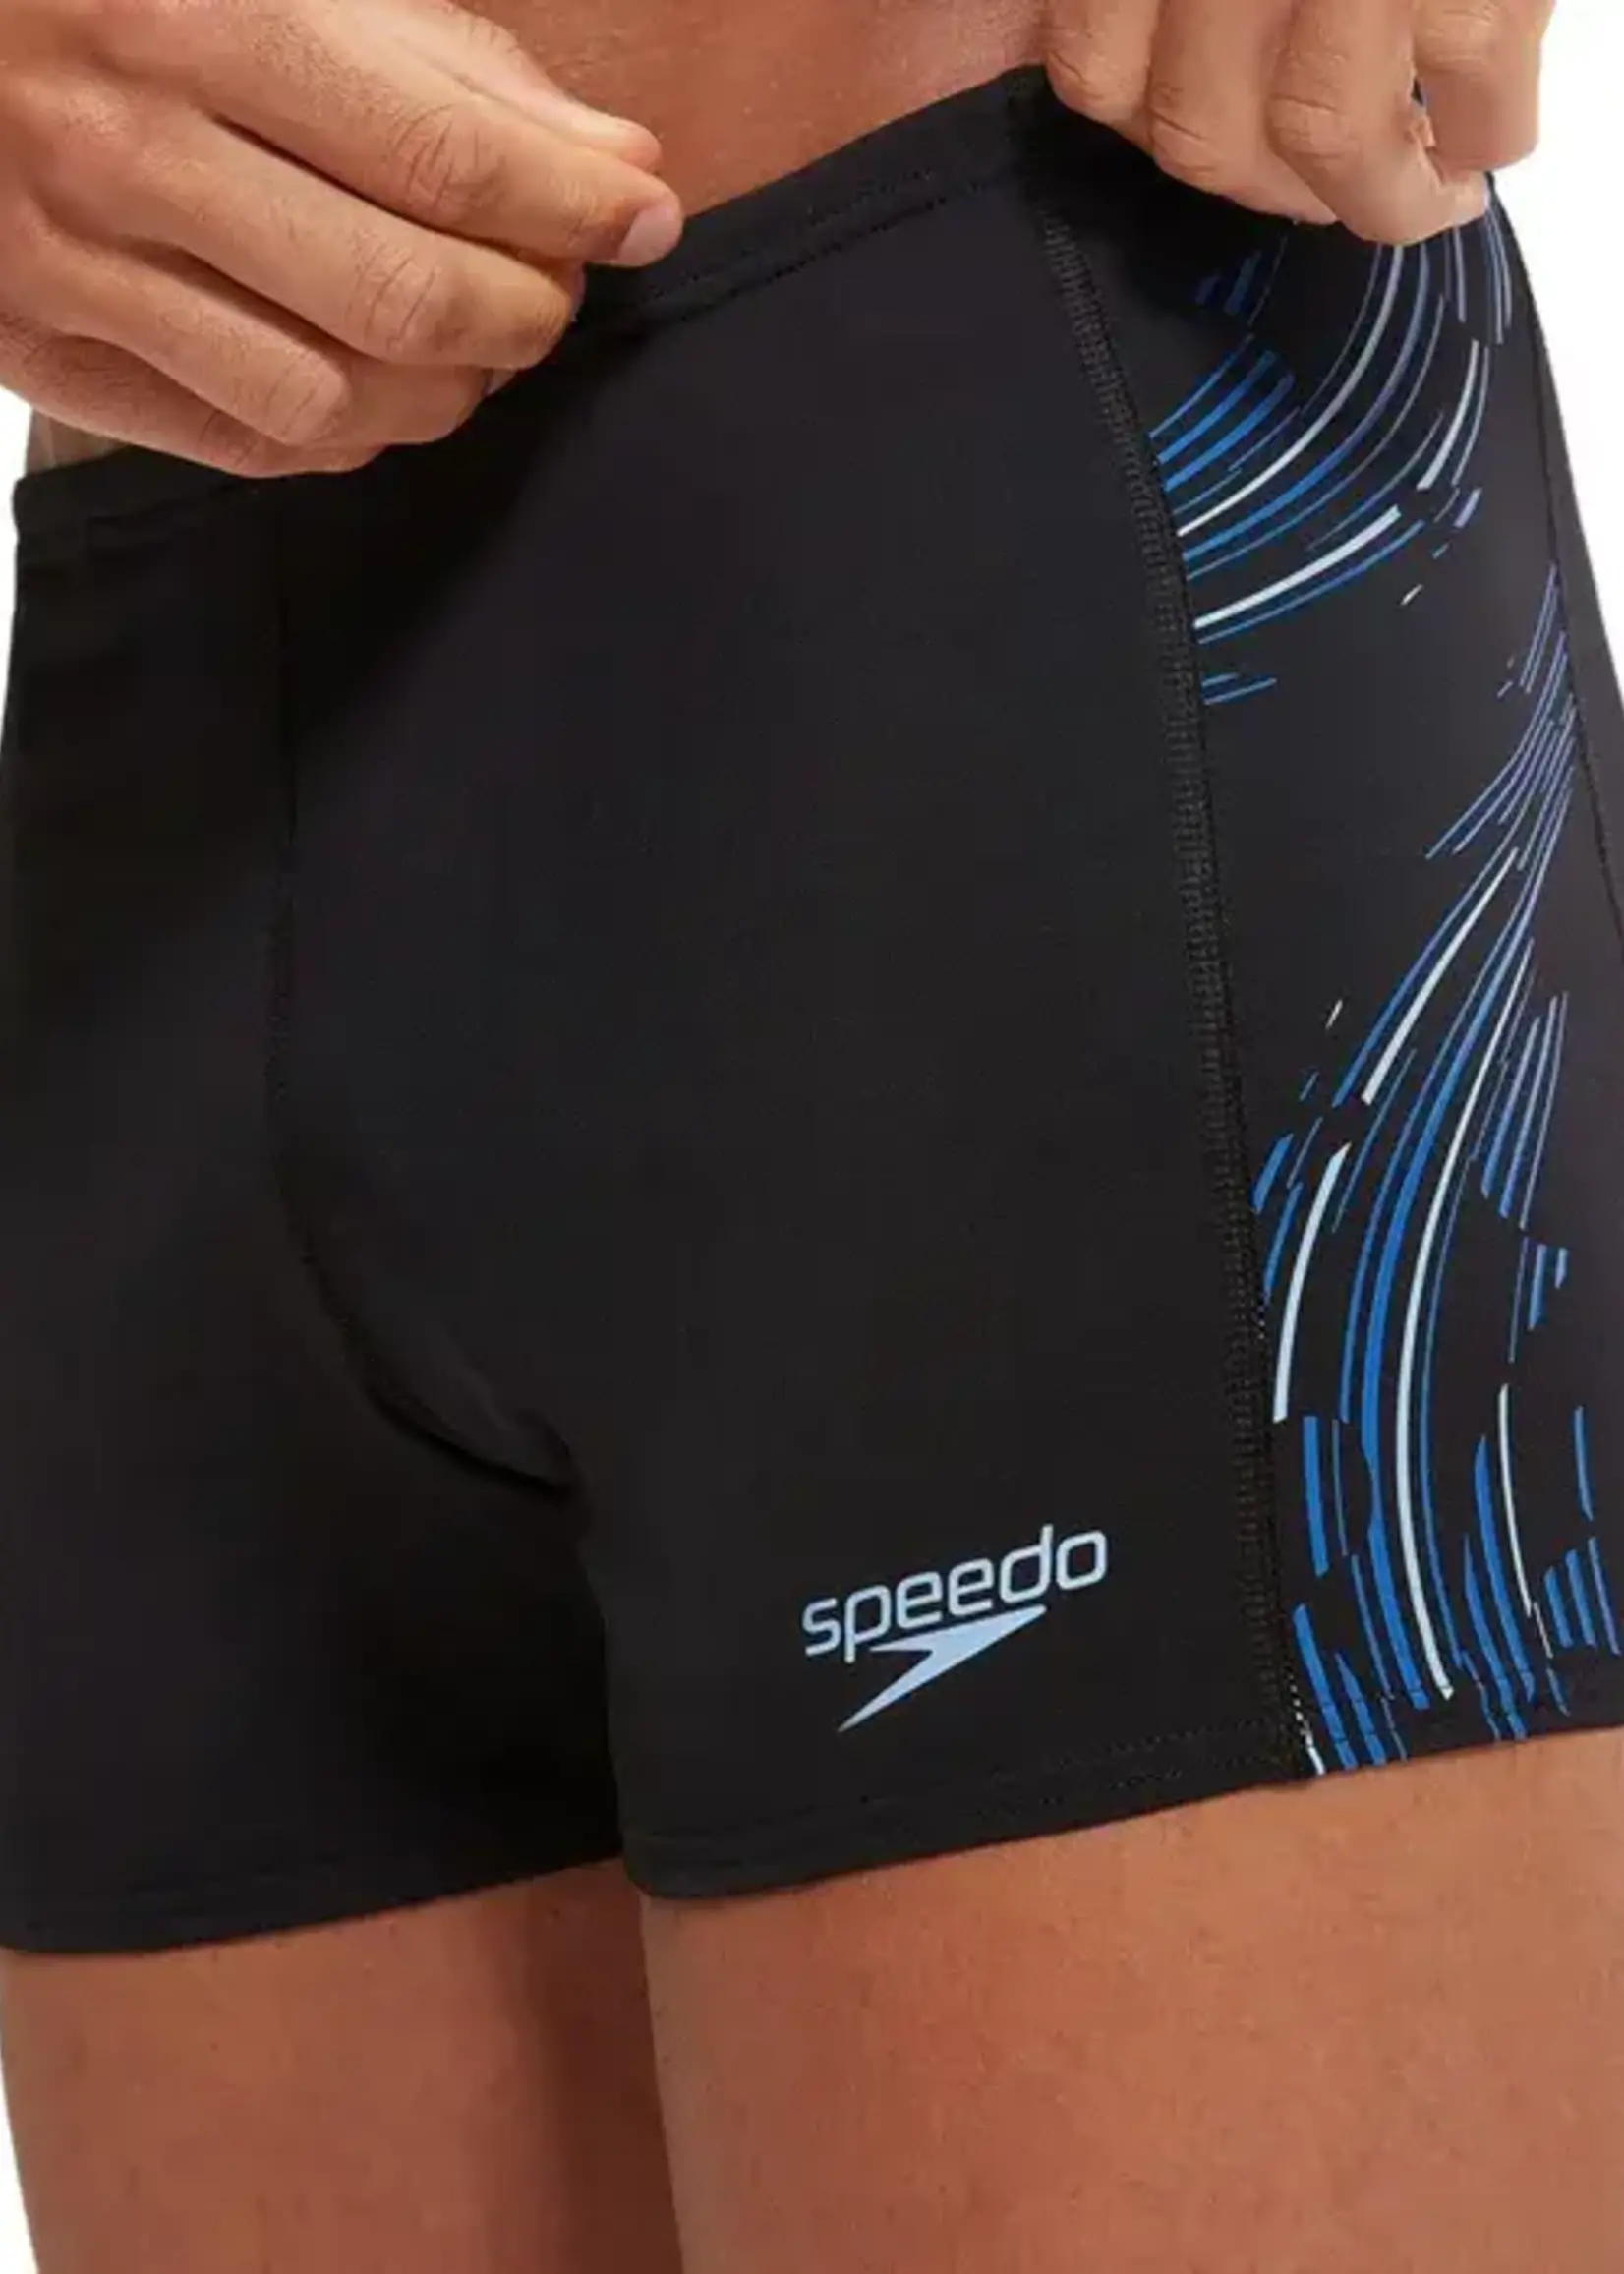 Speedo ECO+ Tech Panel Aquashort BLACK/BLUE